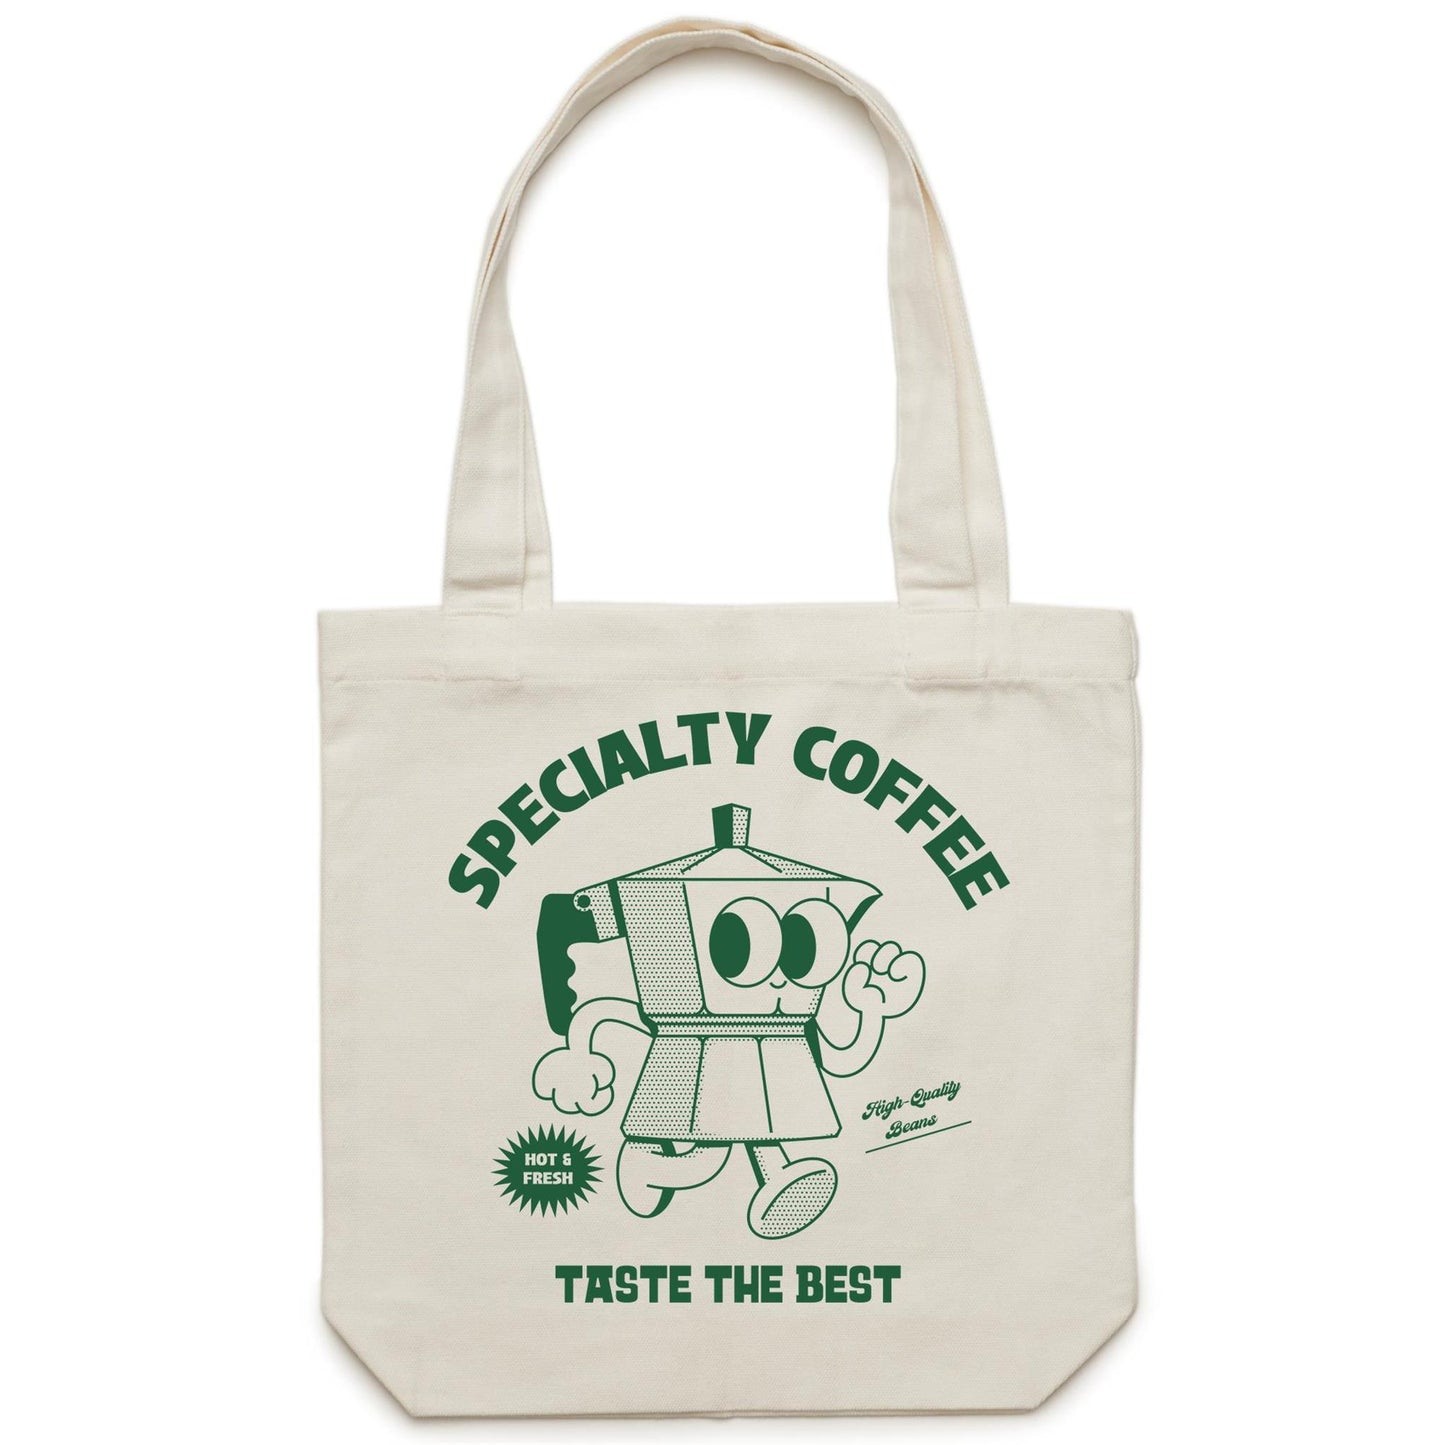 Specialty Coffee - Canvas Tote Bag Cream One Size Tote Bag Coffee Retro